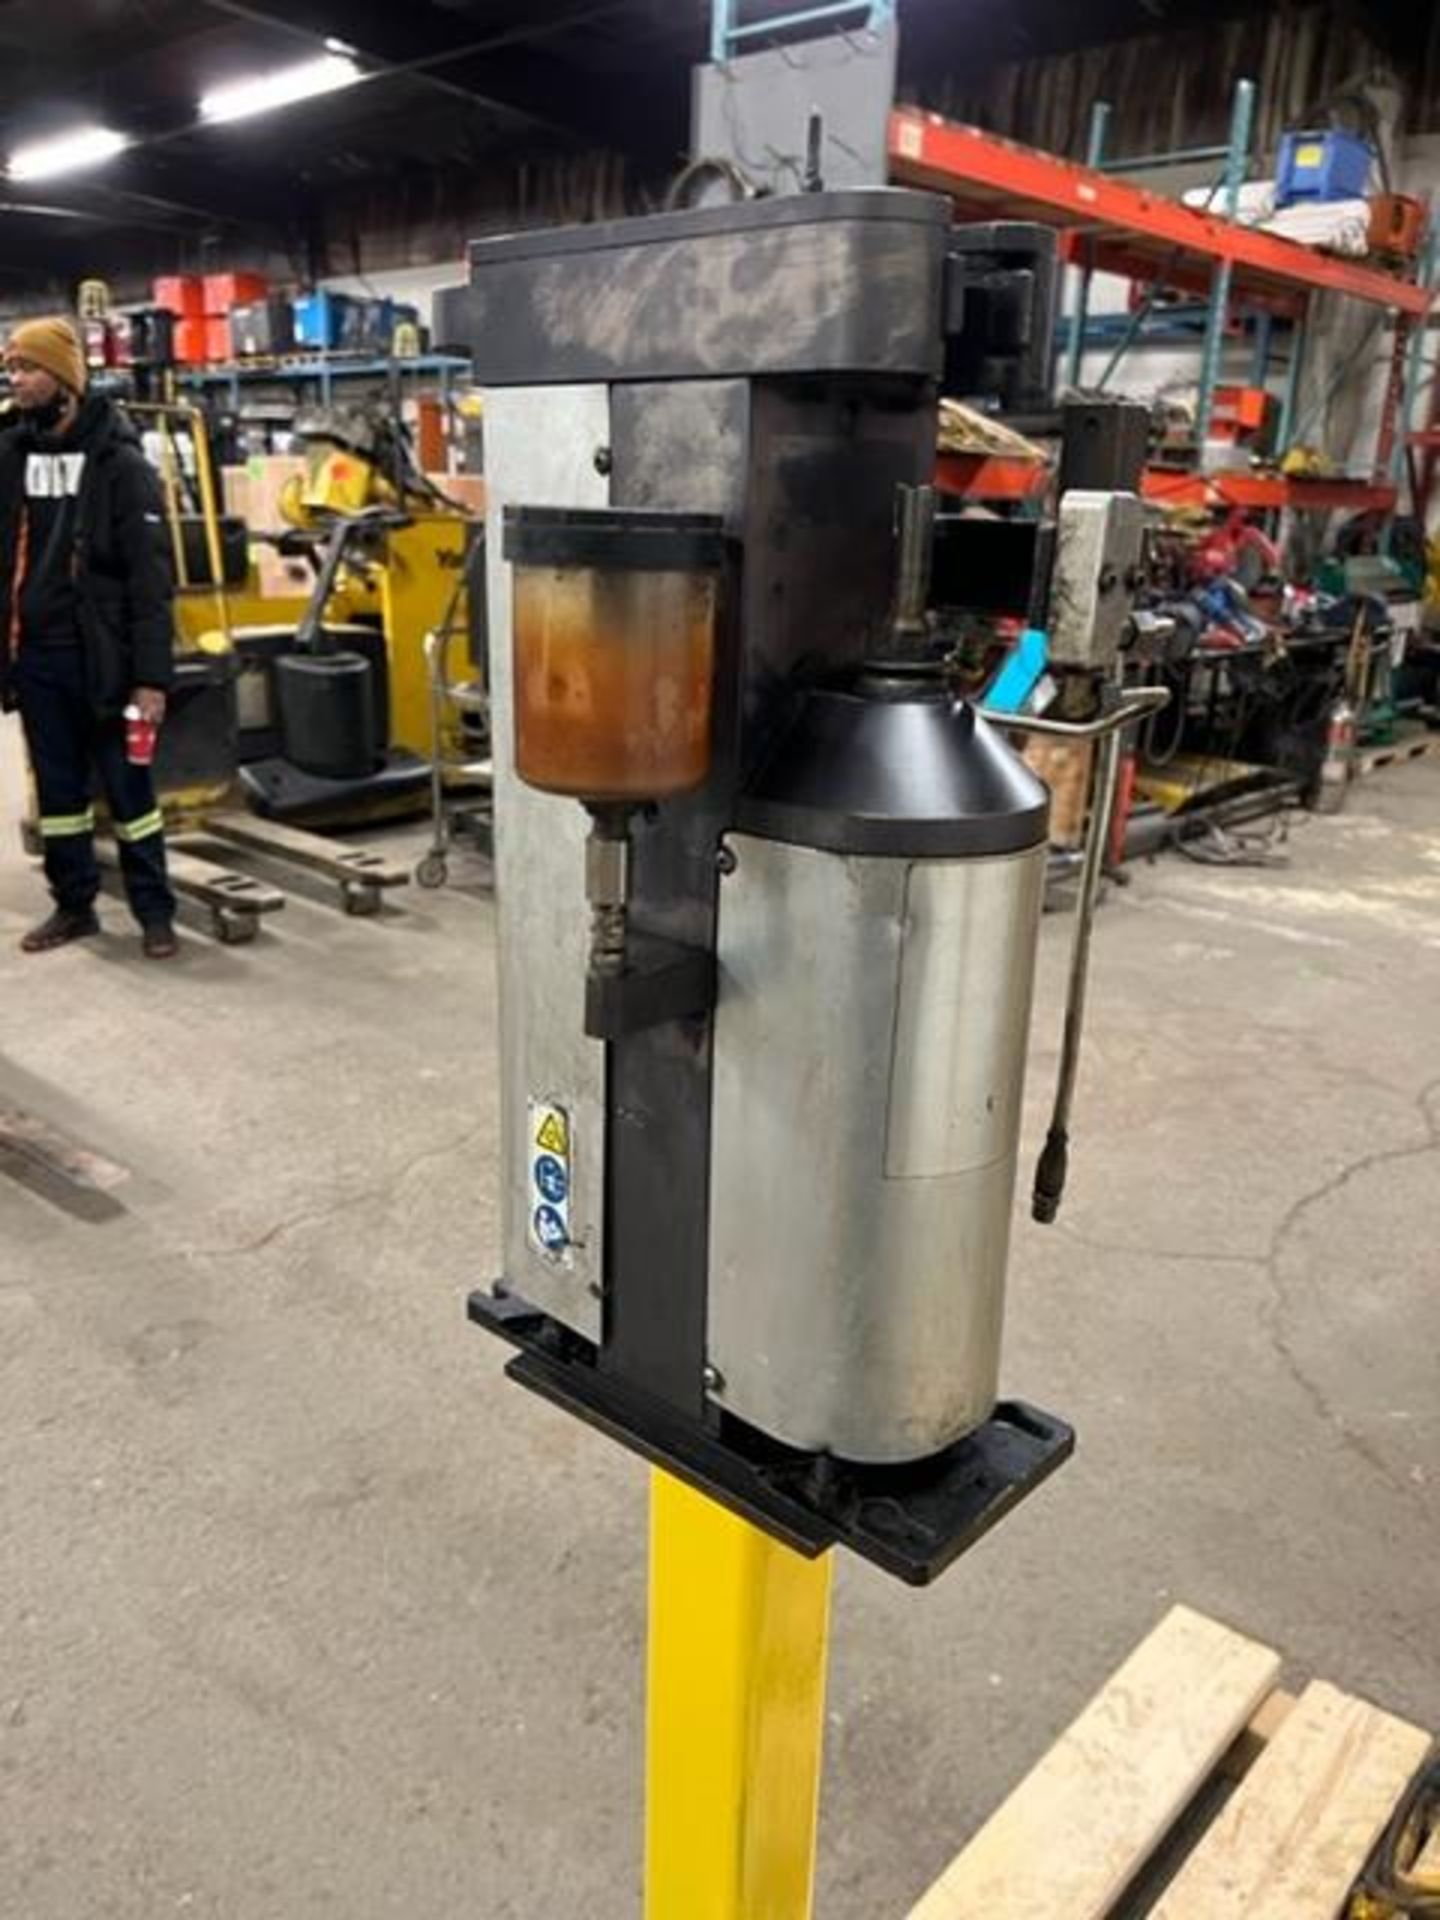 Tregaskiss TT Tough Gun Reamer Robotic Nozzle Torch Cleaning Station for robot welder - Image 3 of 3